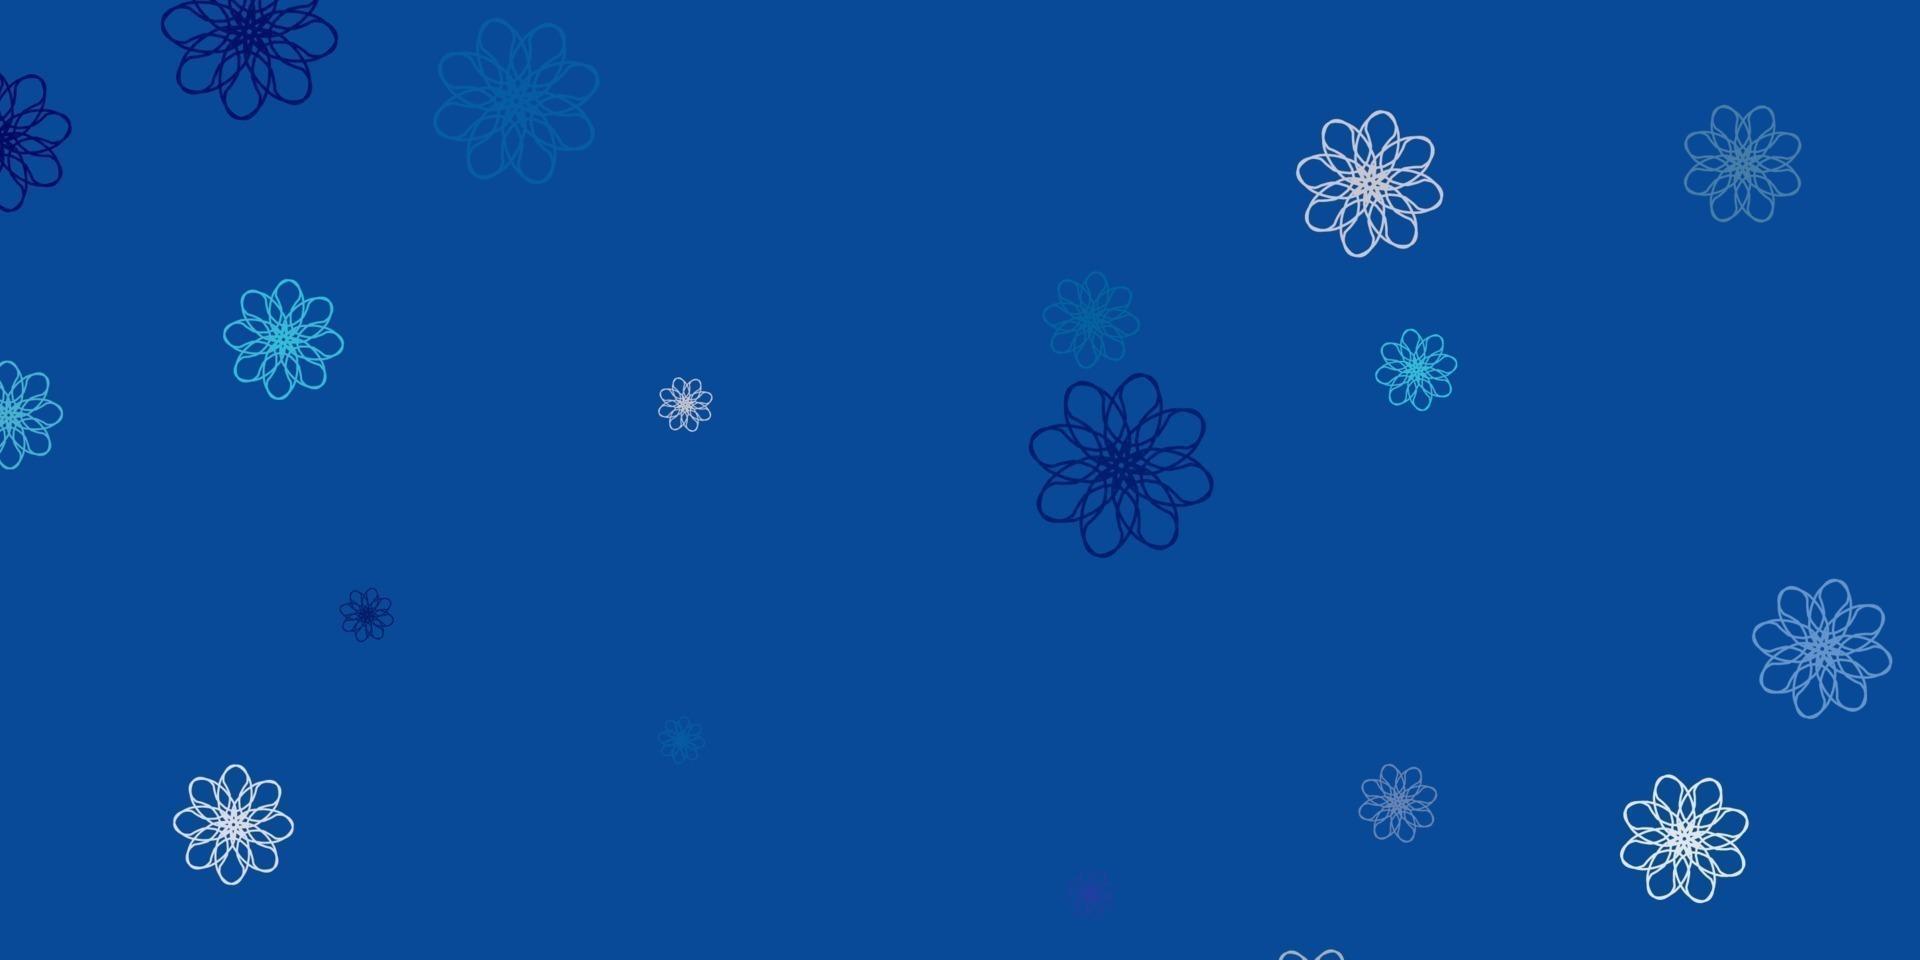 ljusblå vektor doodle mönster med blommor.